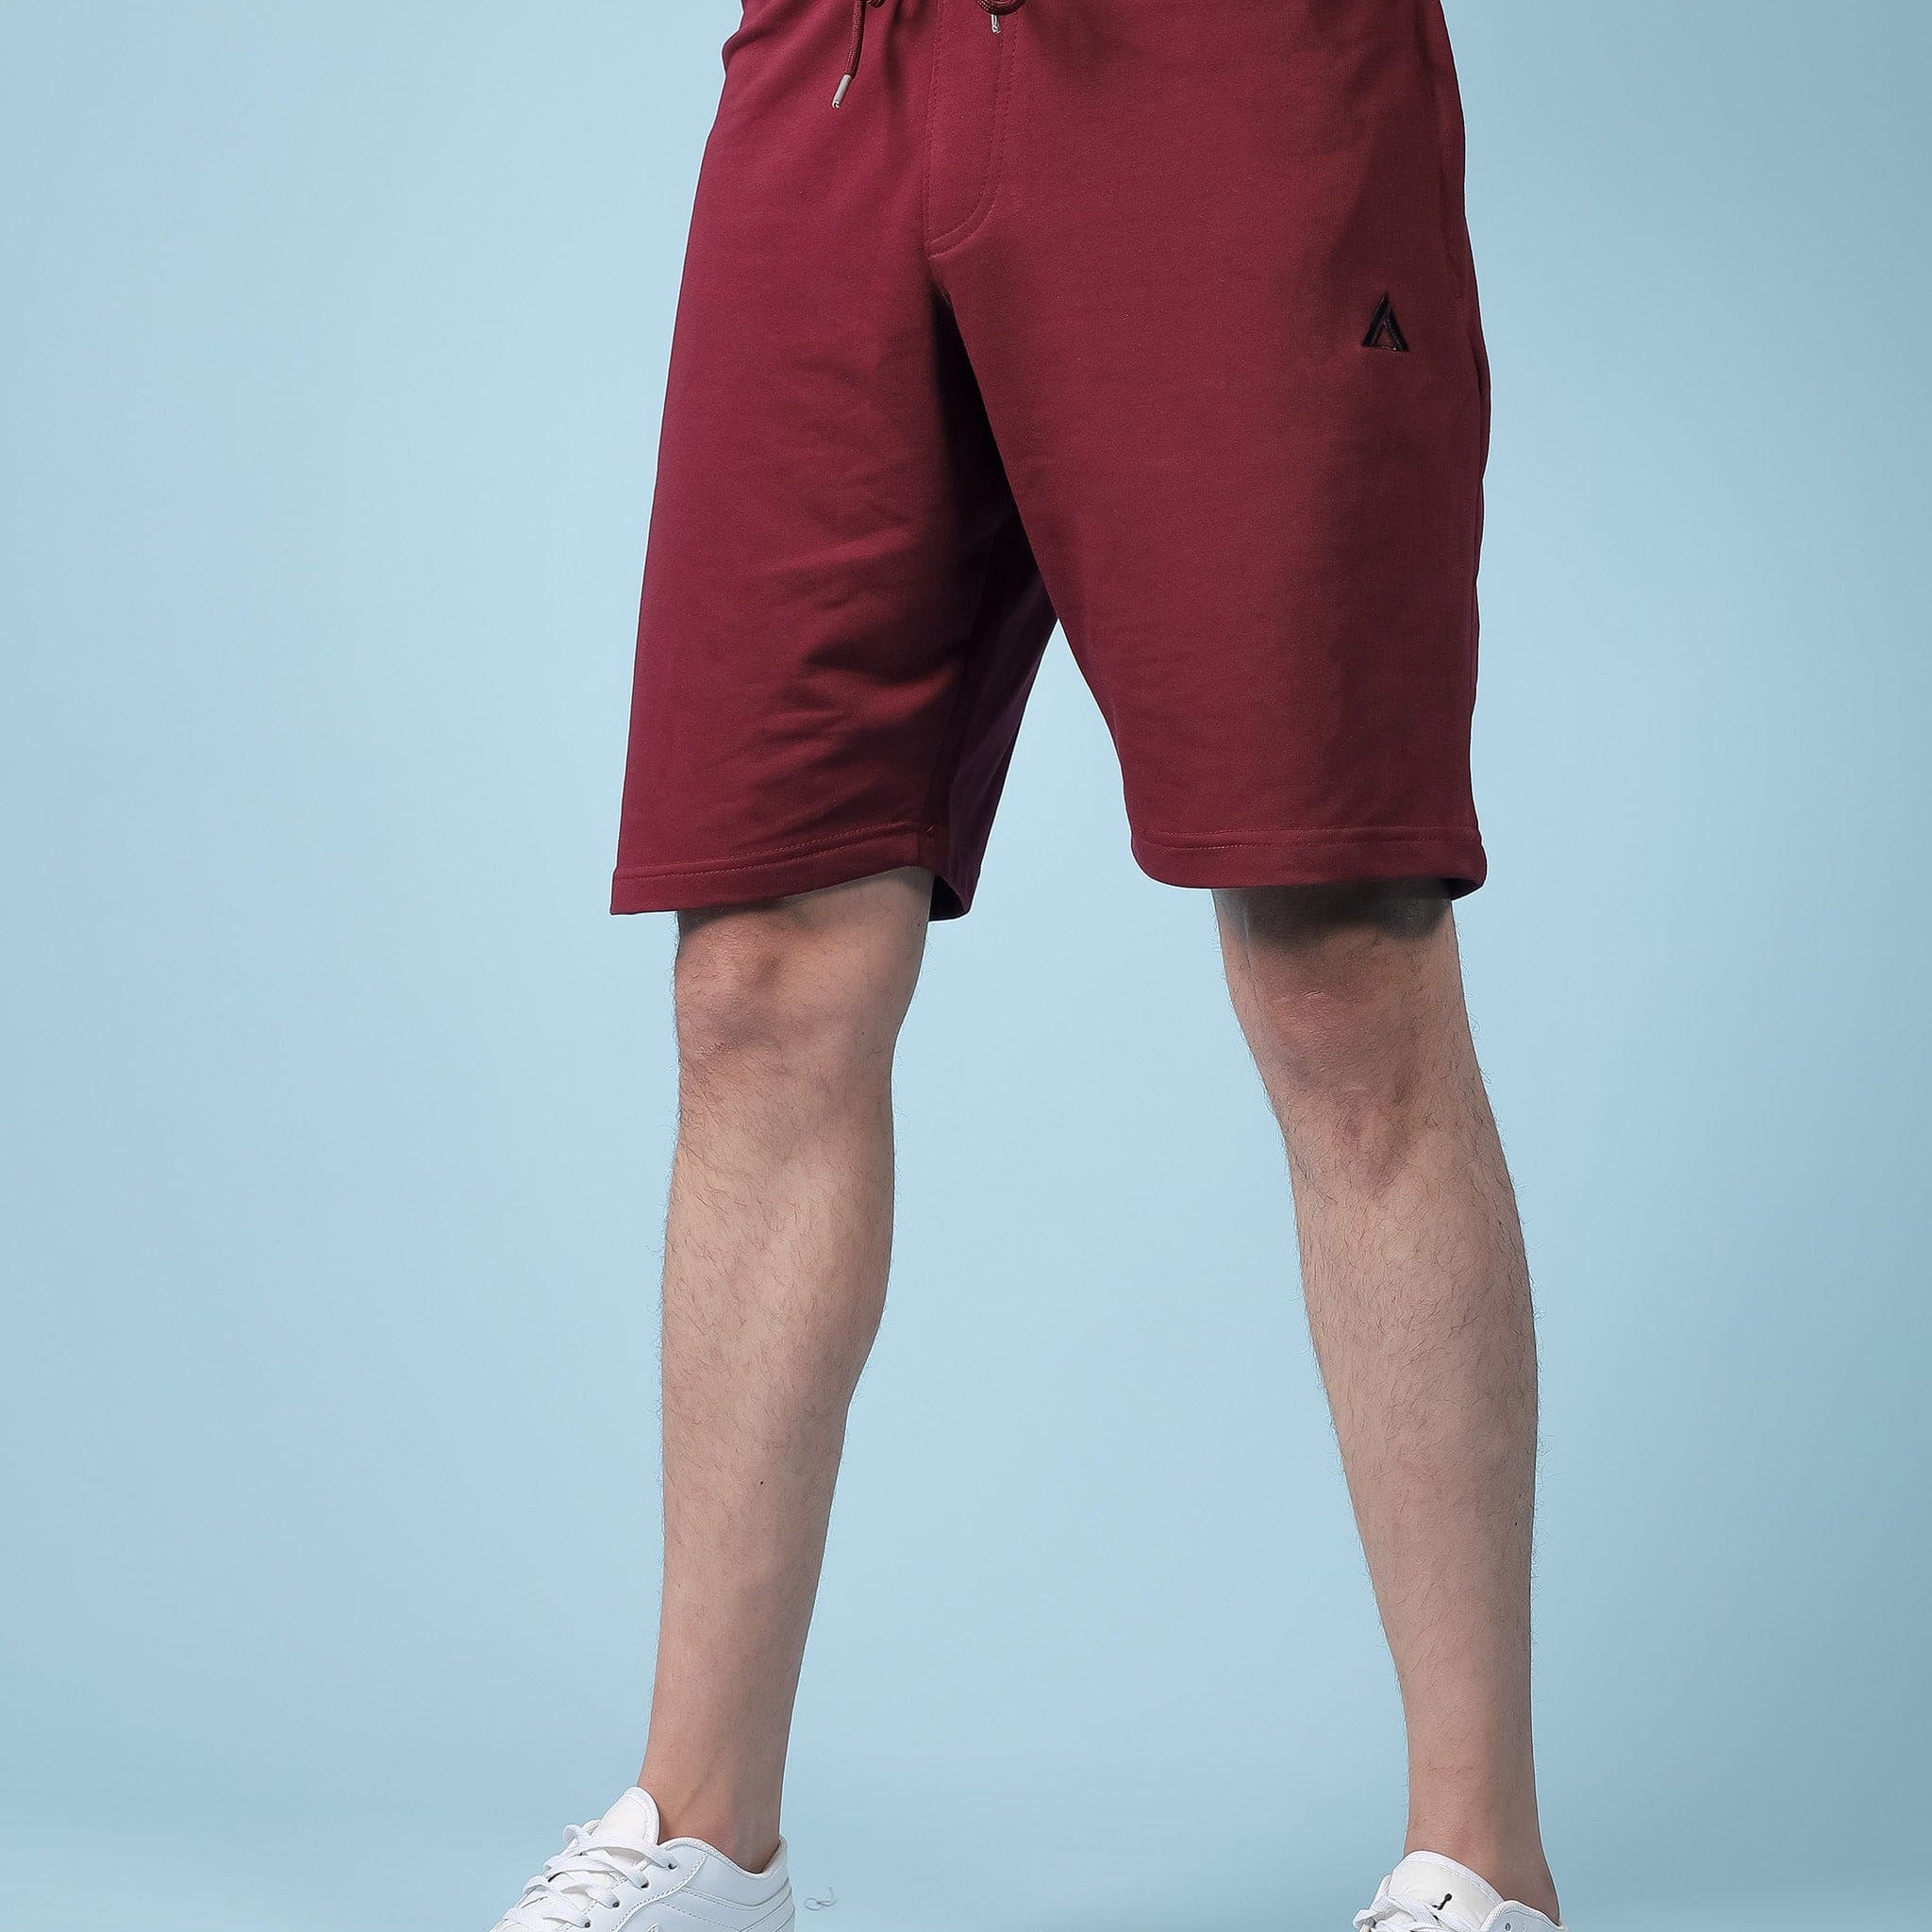 Solid Maroon Shorts